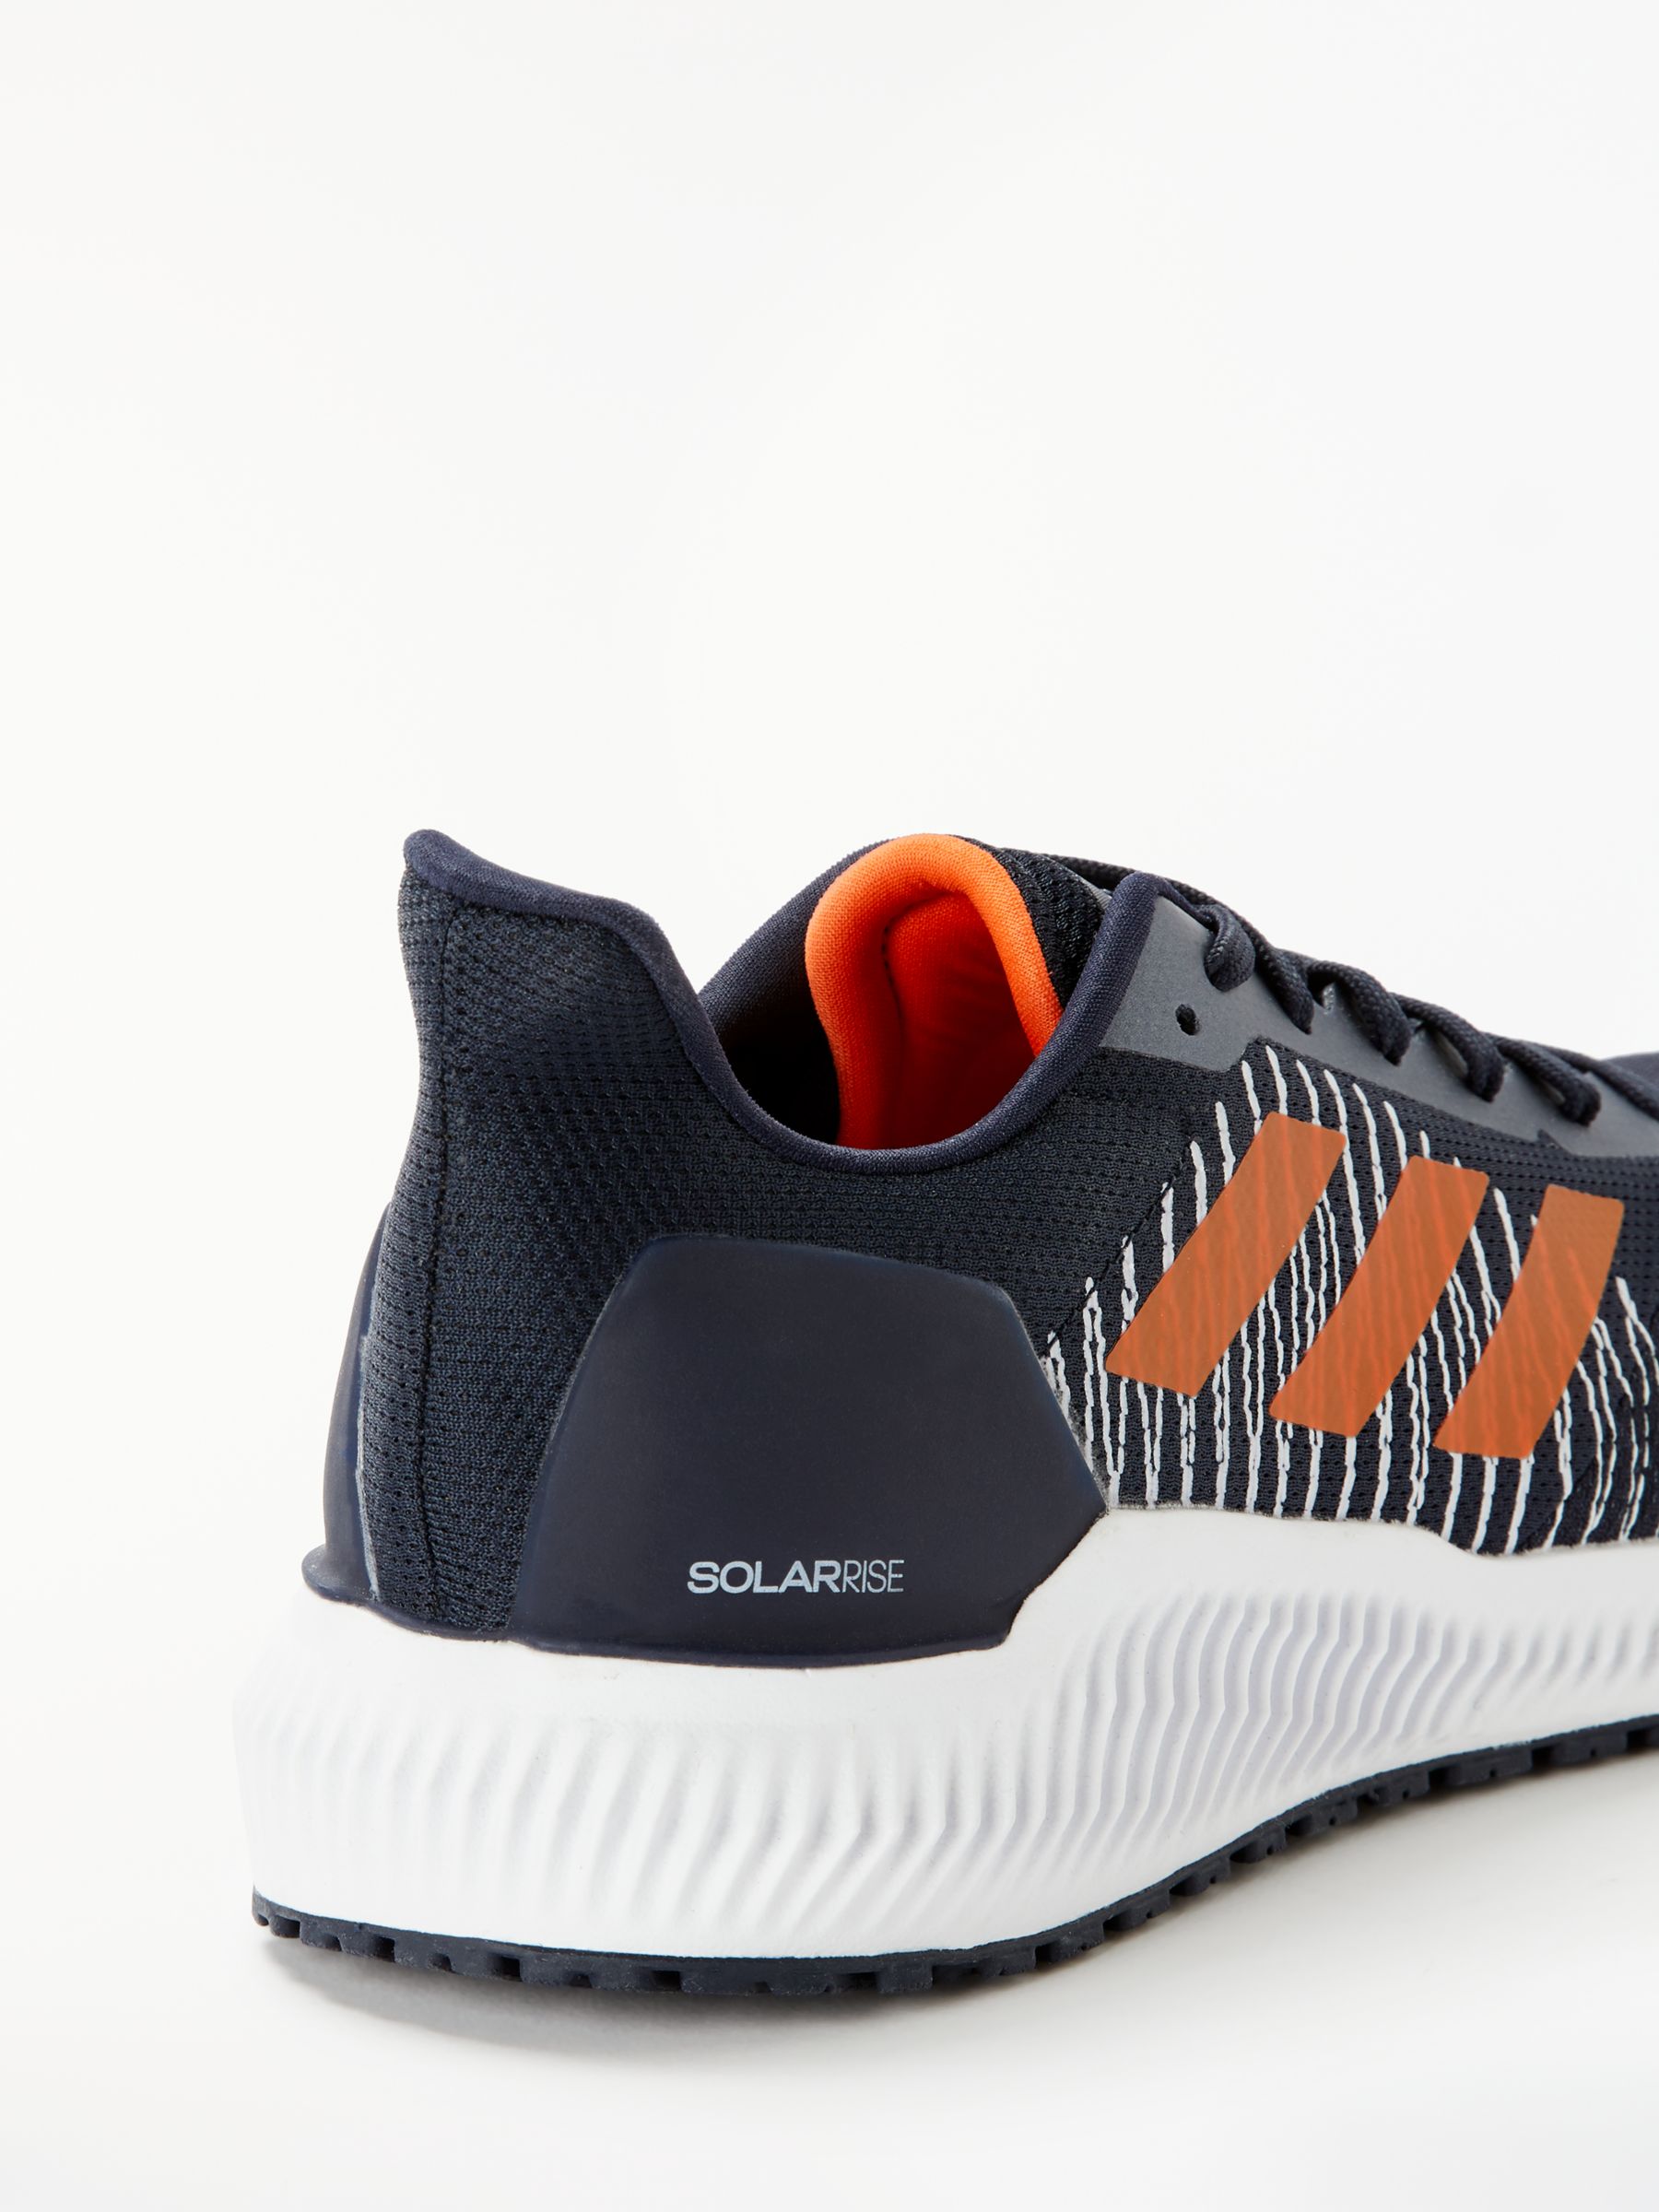 adidas men's solar ride running shoe